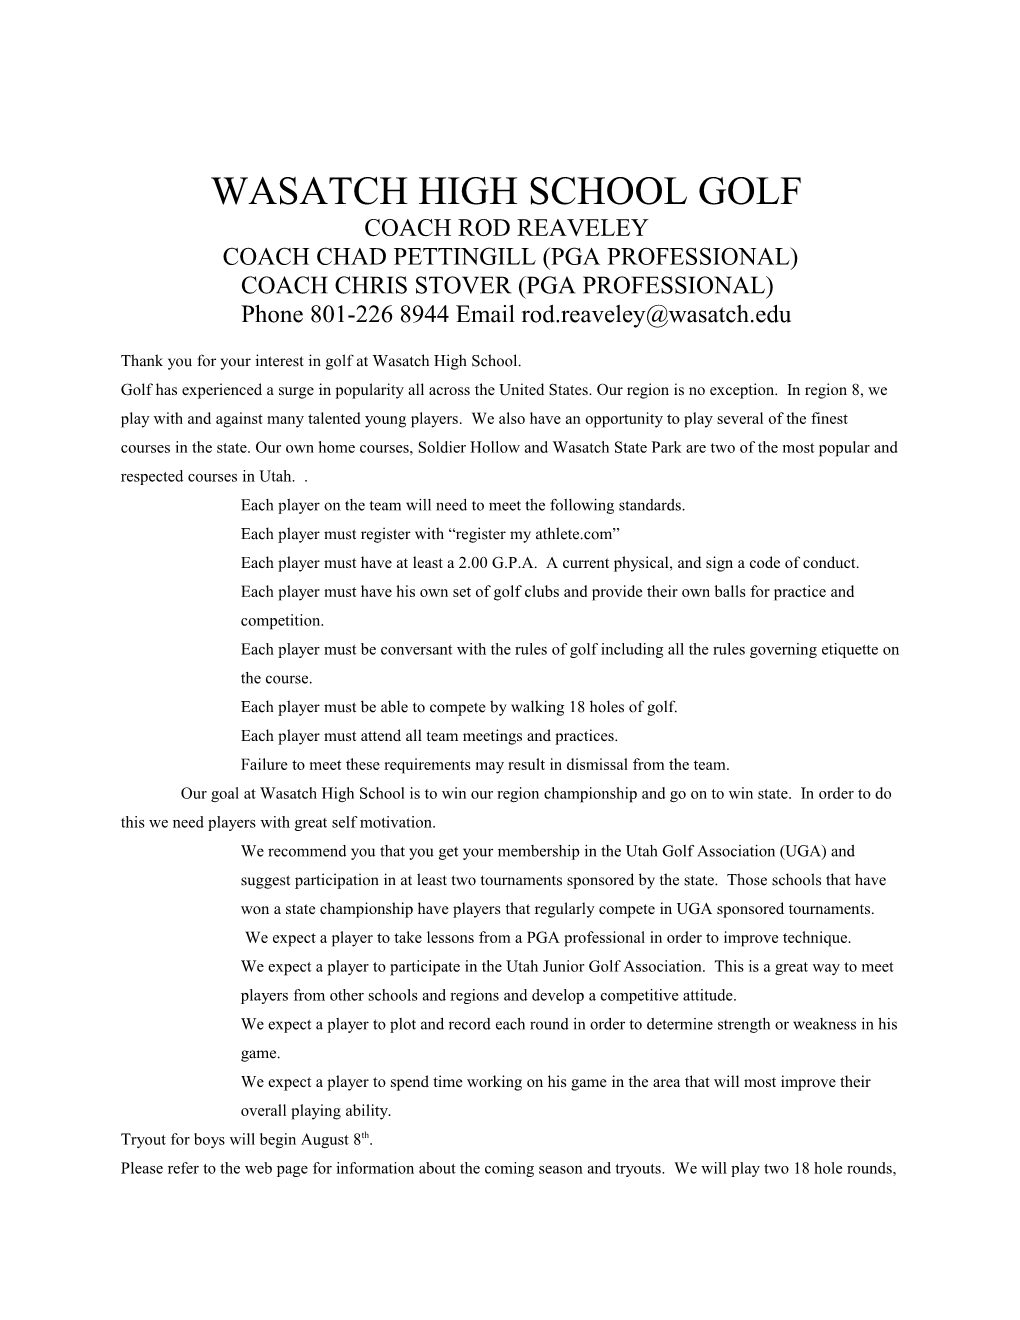 Wasatch High School Golf